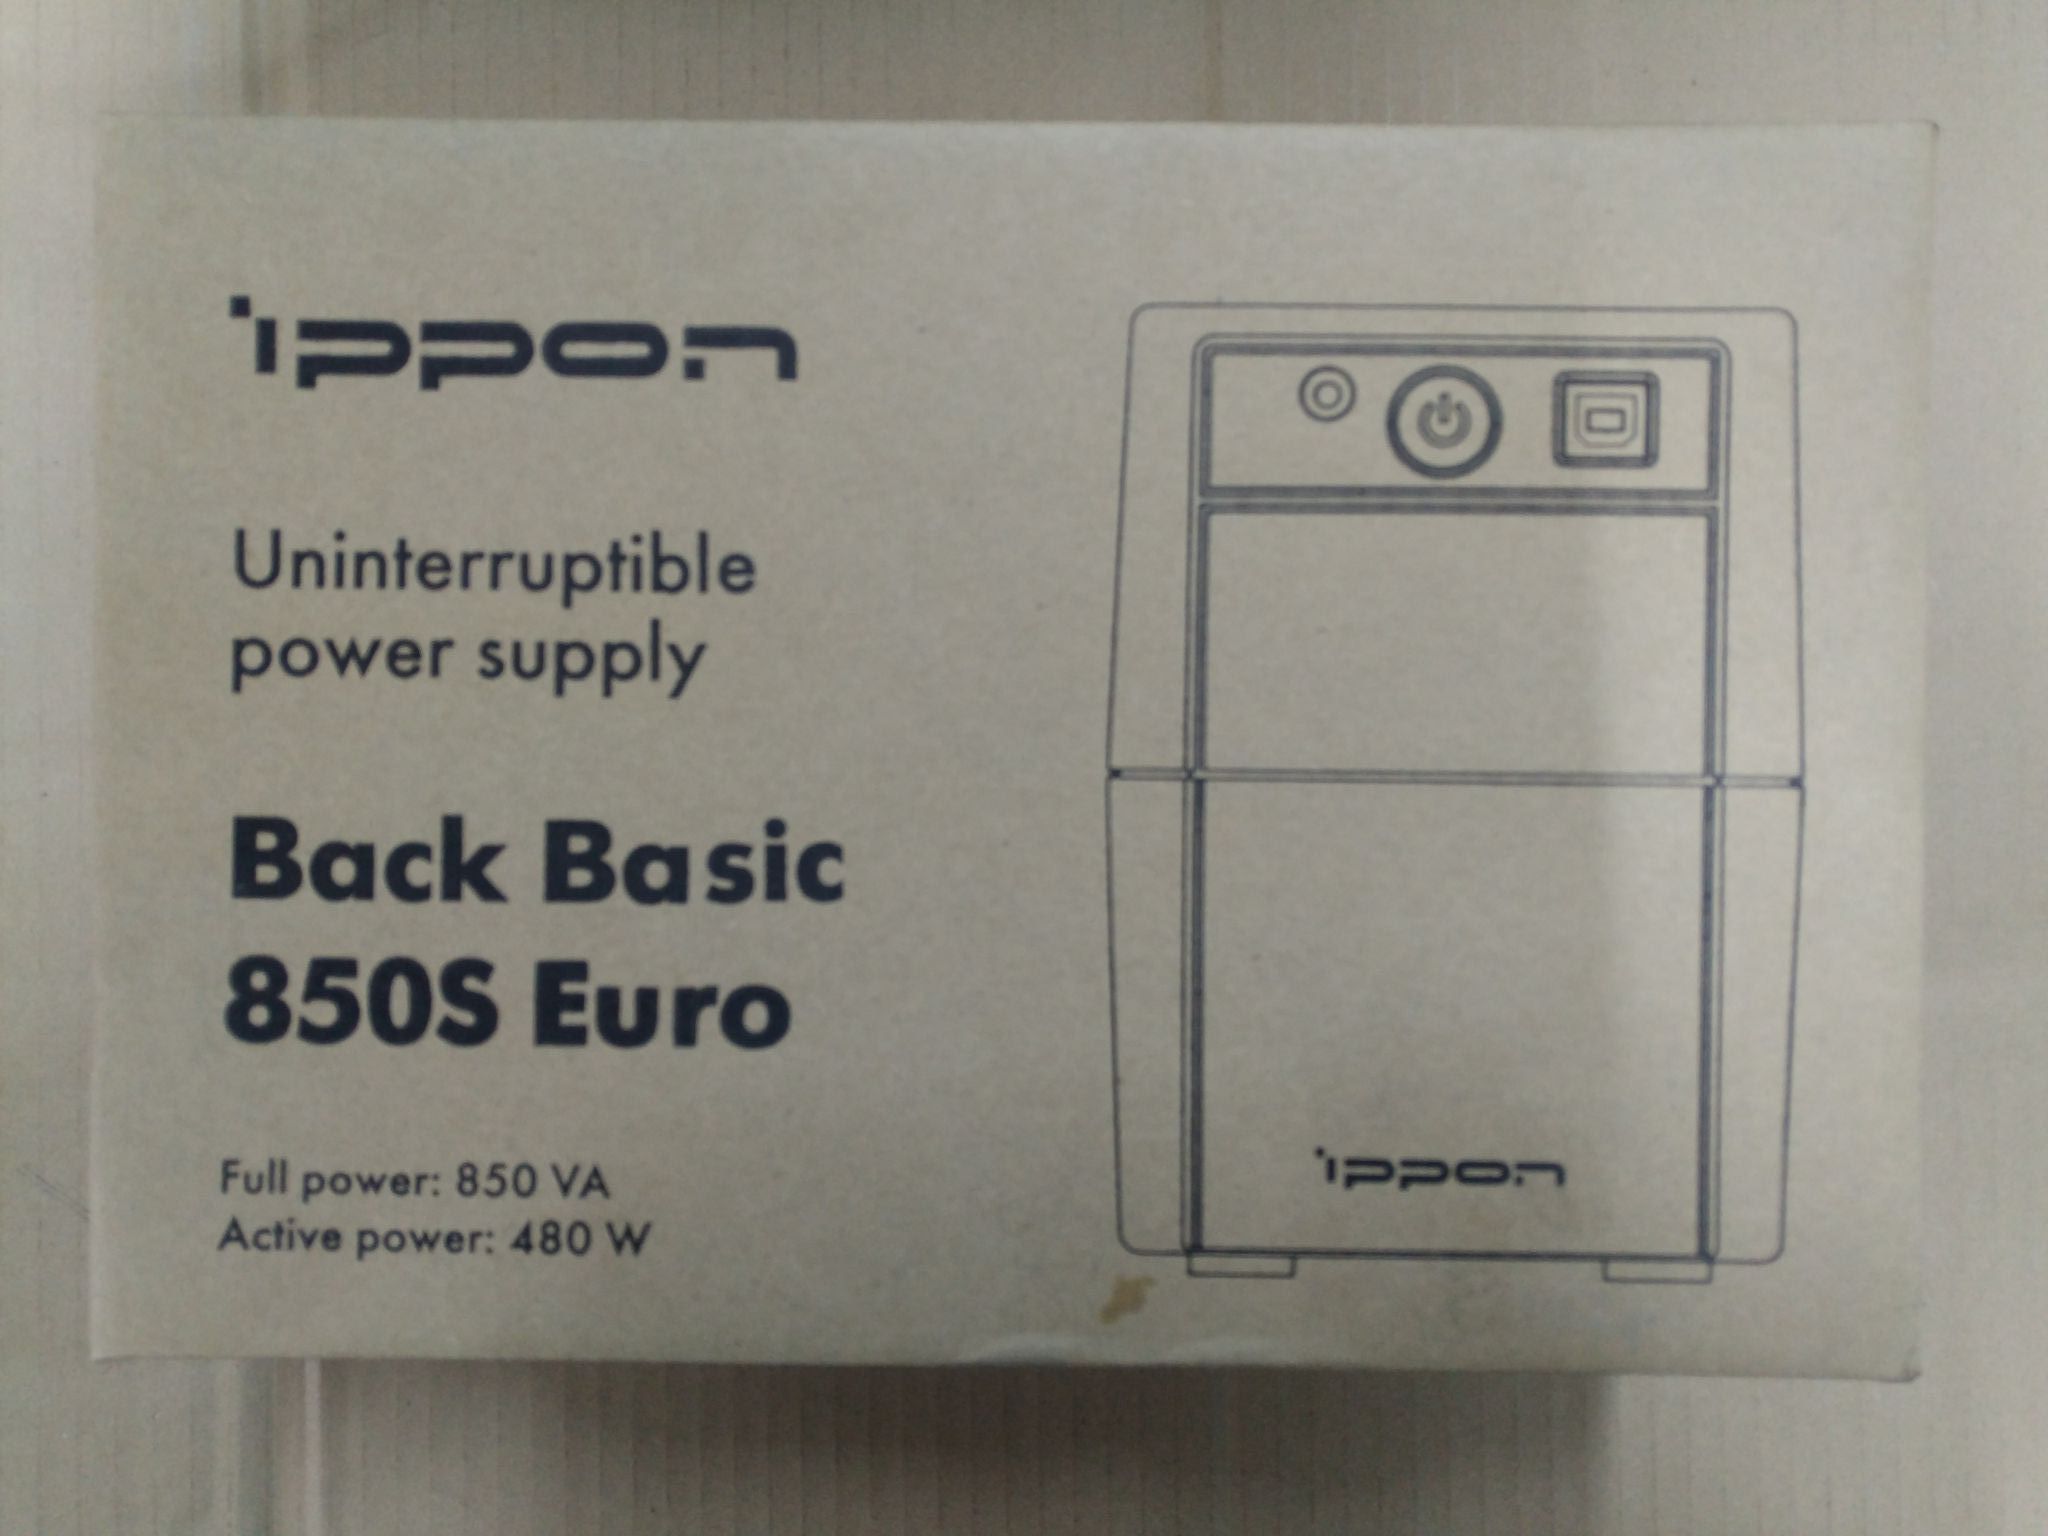 Ippon back basic 850s. ИБП Ippon back Basic 850. Ippon back Basic 850s Euro. ИПБ Ippon back Basic 850s Euro, a. ИБП Ippon back Basic 850s Euro.